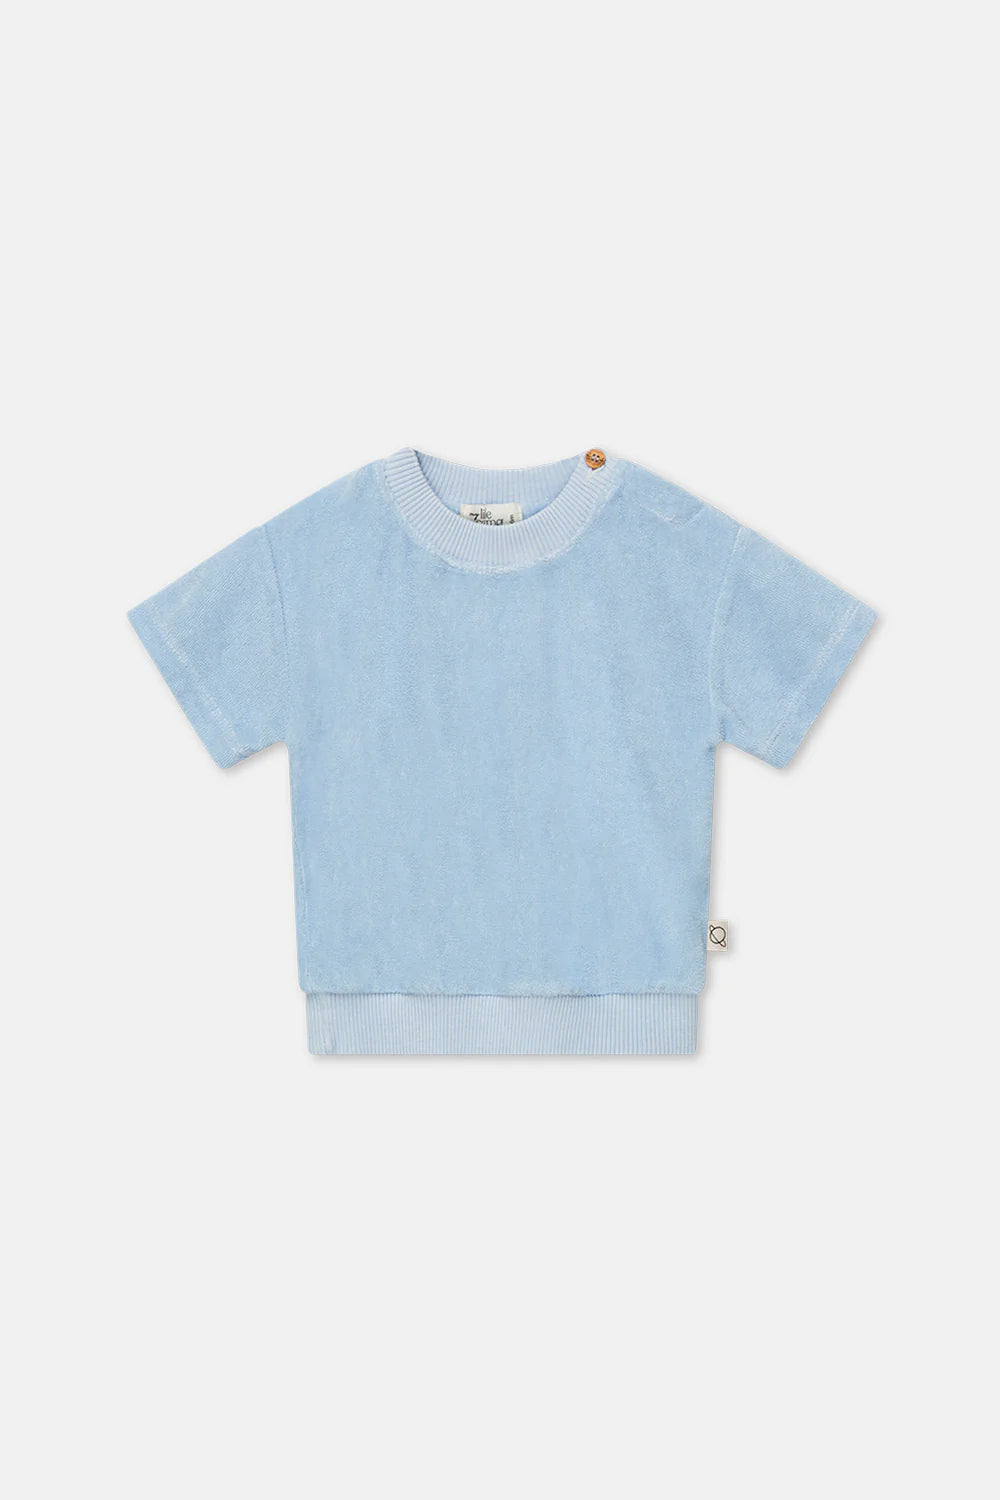 T-Shirt Toweling Baby Boy Laurel Blue - ملابس